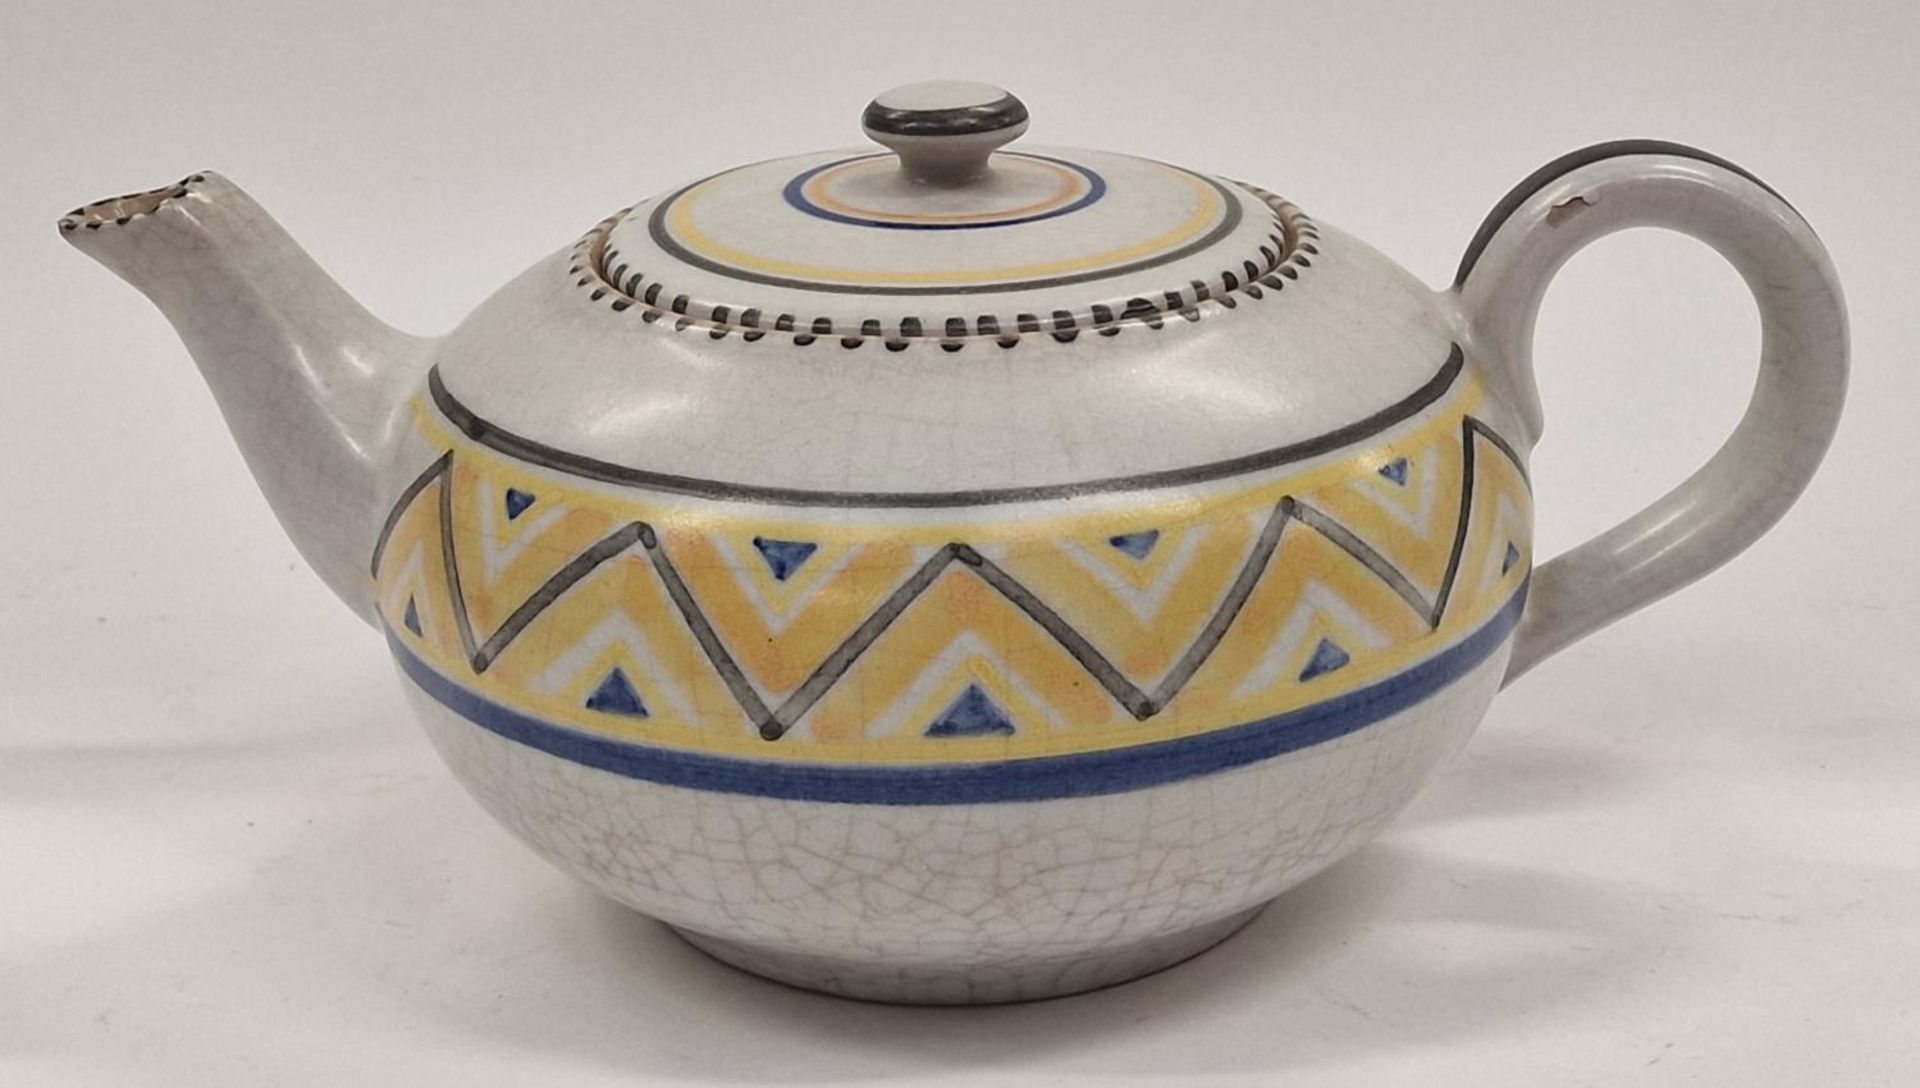 Poole Pottery Carter Stabler Adams hard to find large CN pattern geometric design teapot.